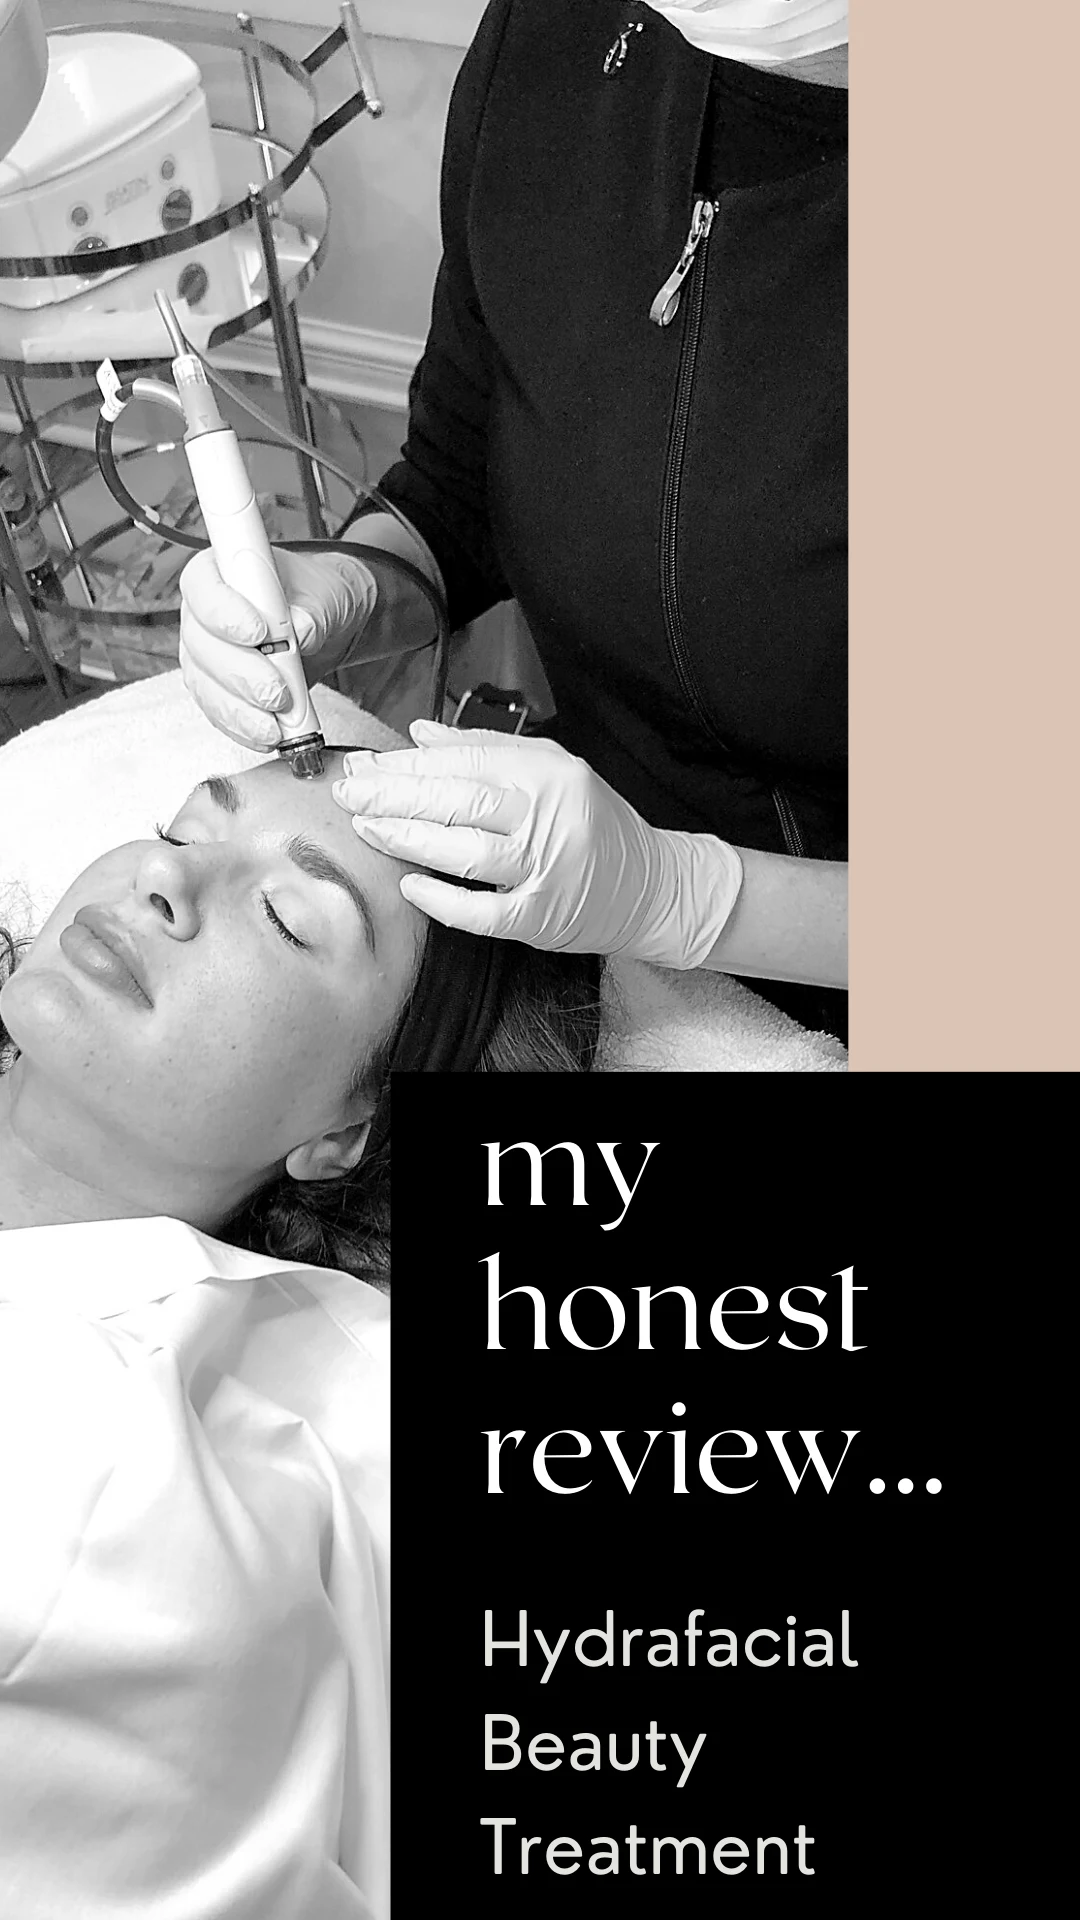 Hydrafacial beauty treatment review